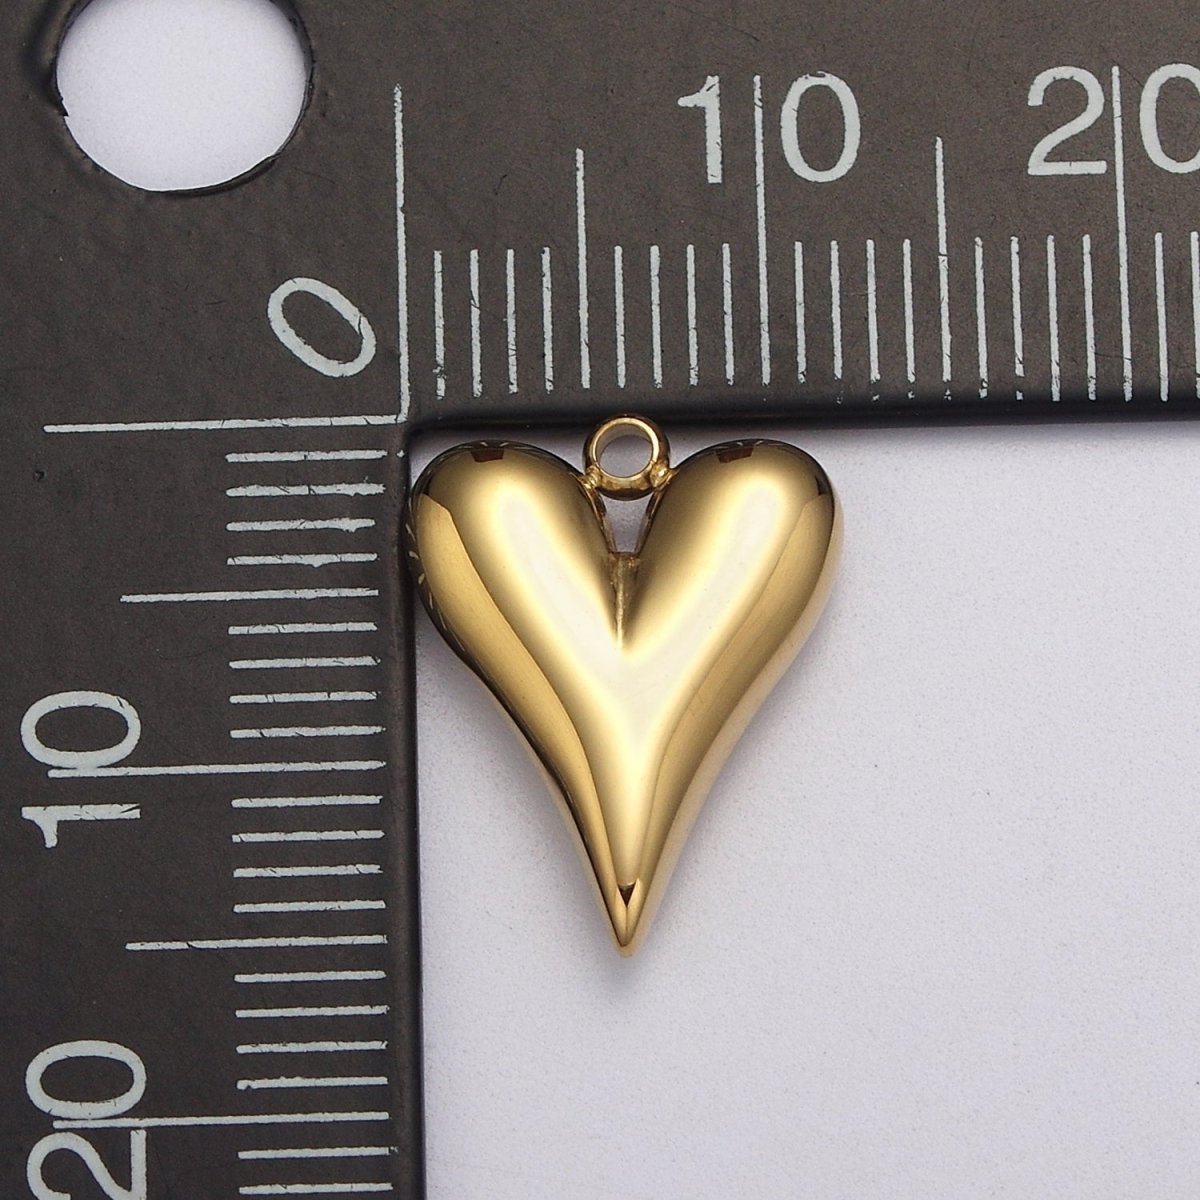 Dainty Gold Heart Charm, Earring Charm, Heart Necklace Pendant, Bracelet Charm Stainless Steel Finding E-749 E-748 - DLUXCA